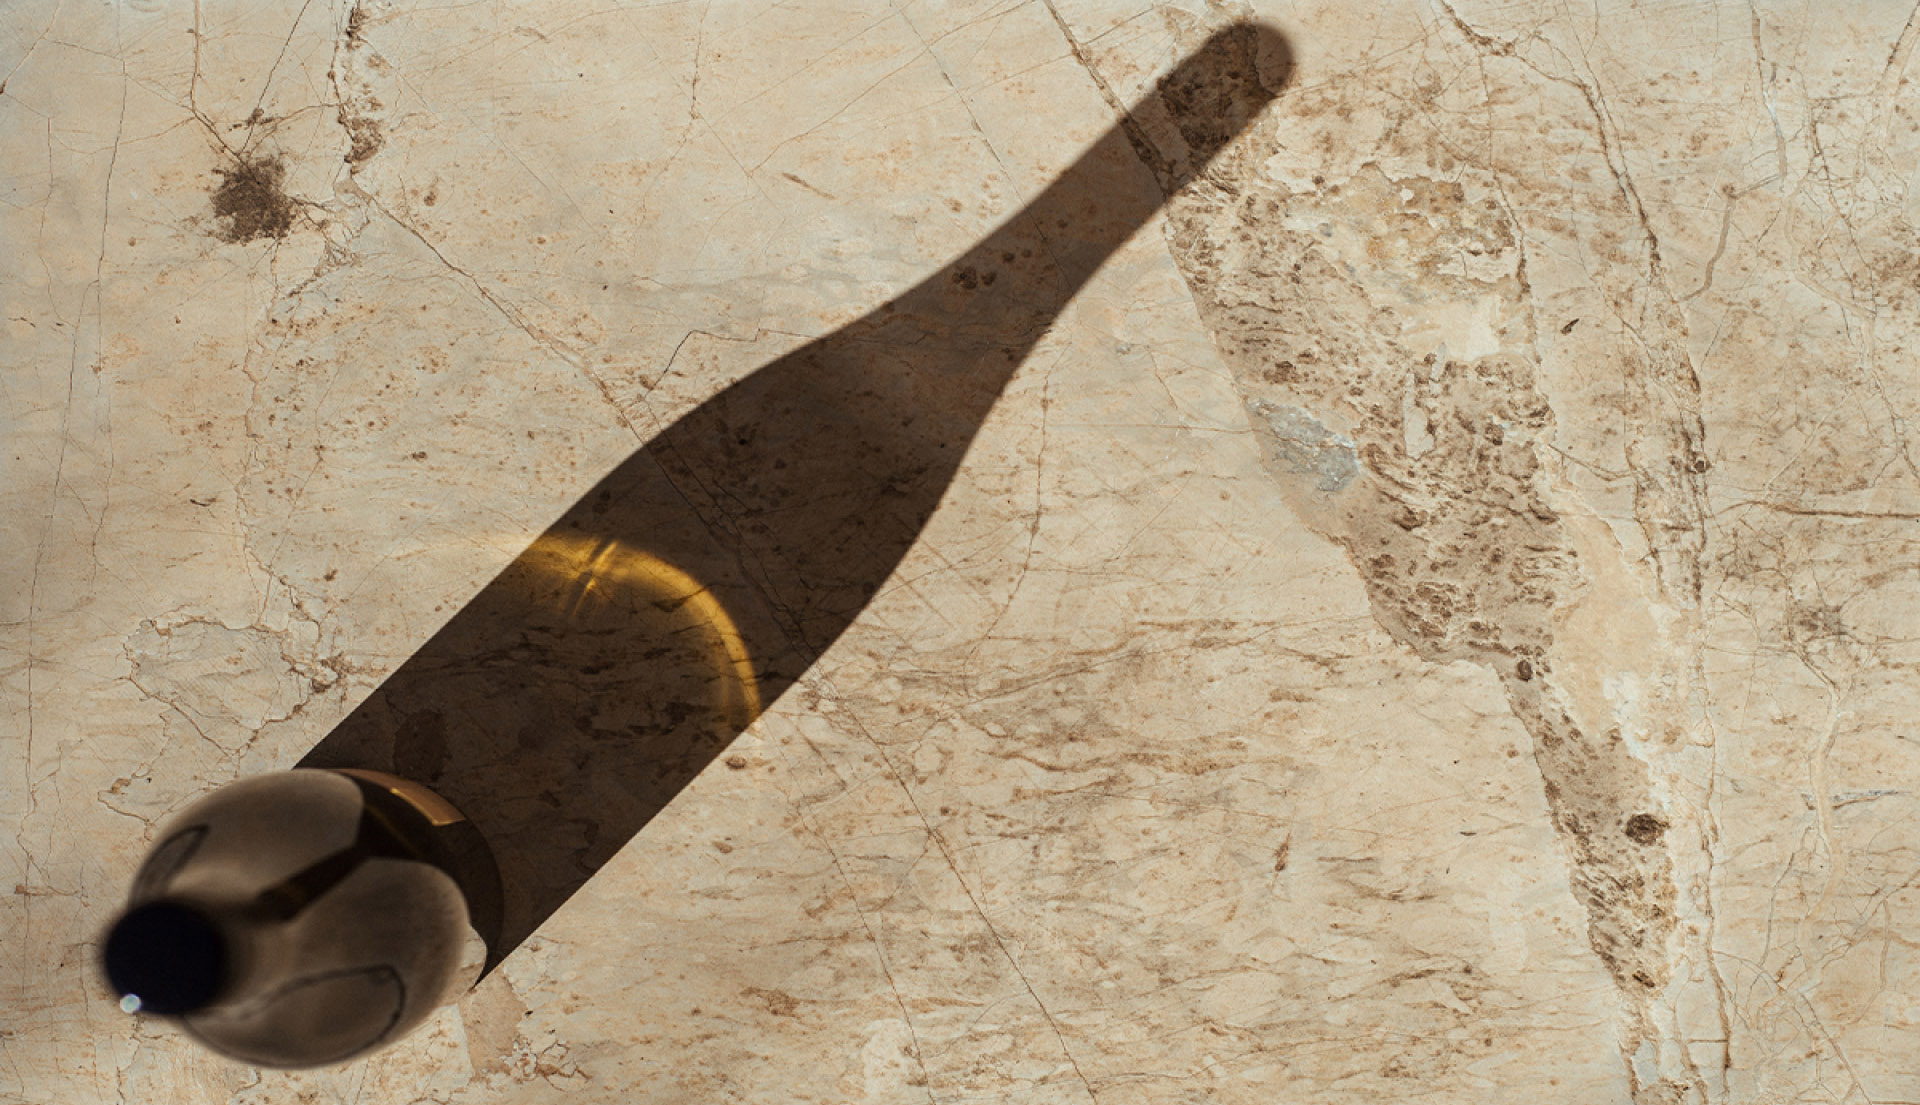 Wine bottle casting long shadow onto stone ground